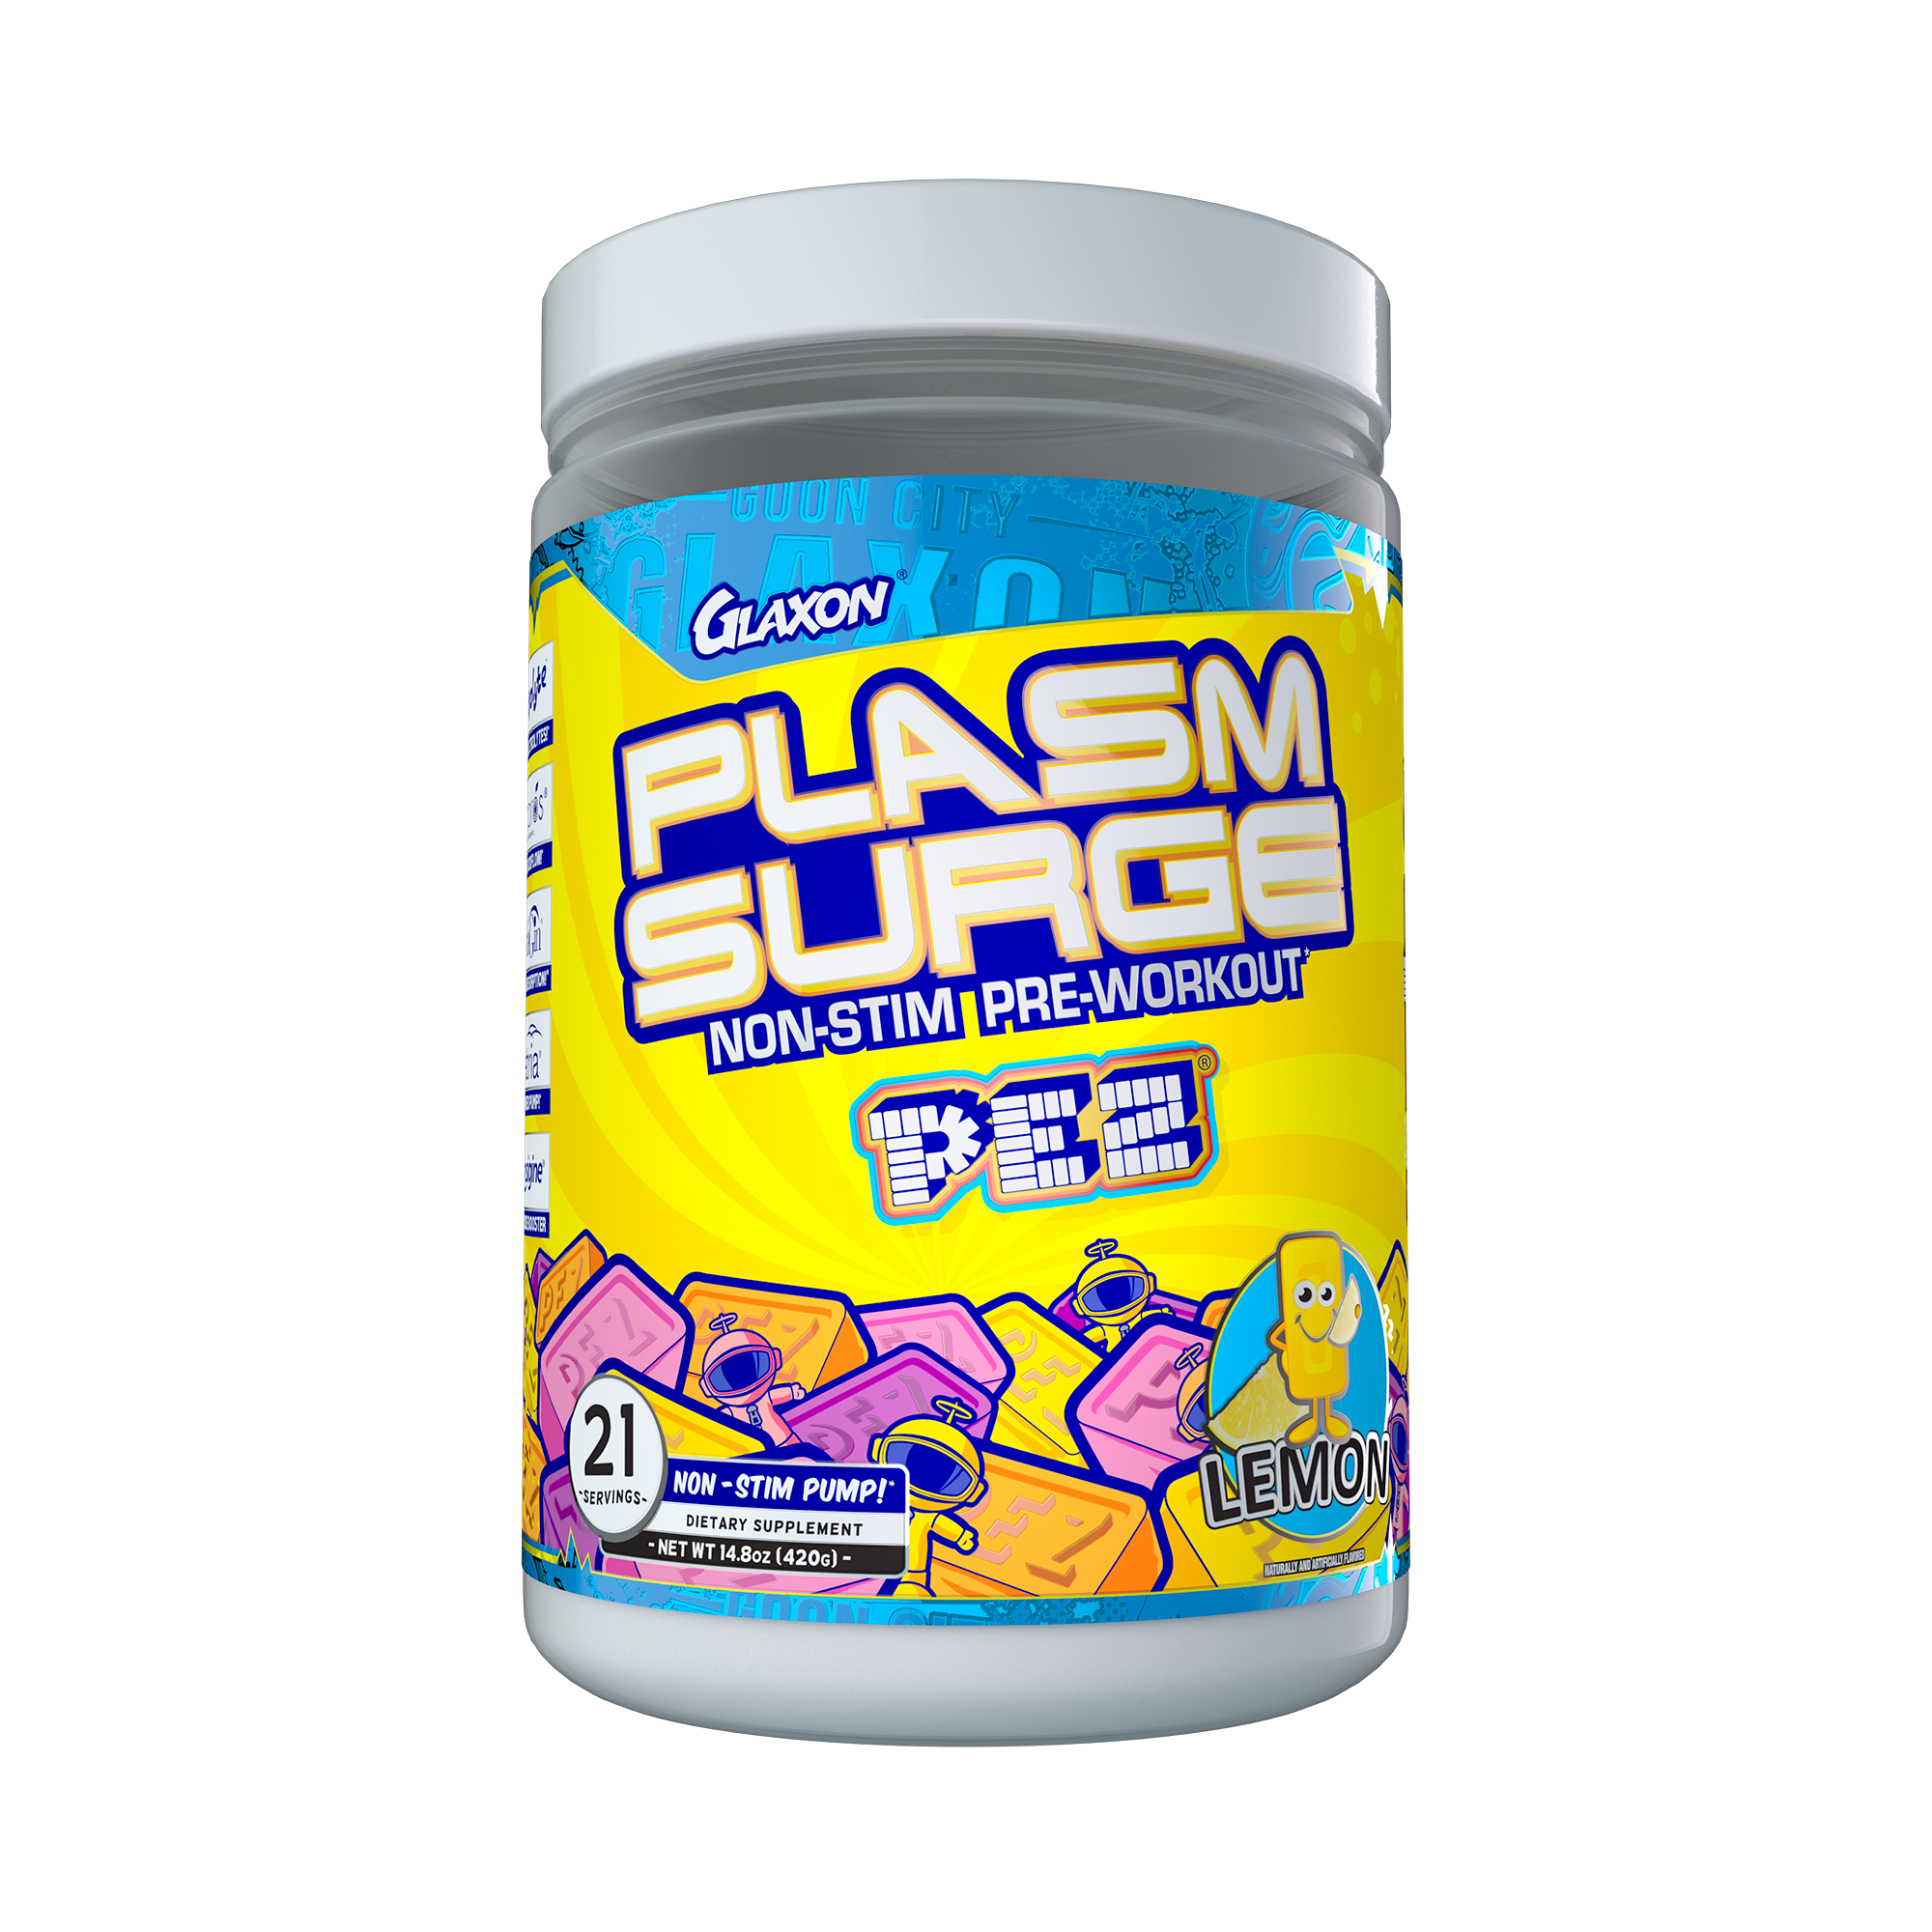 Glaxon PEZ® Plasm Surge V3